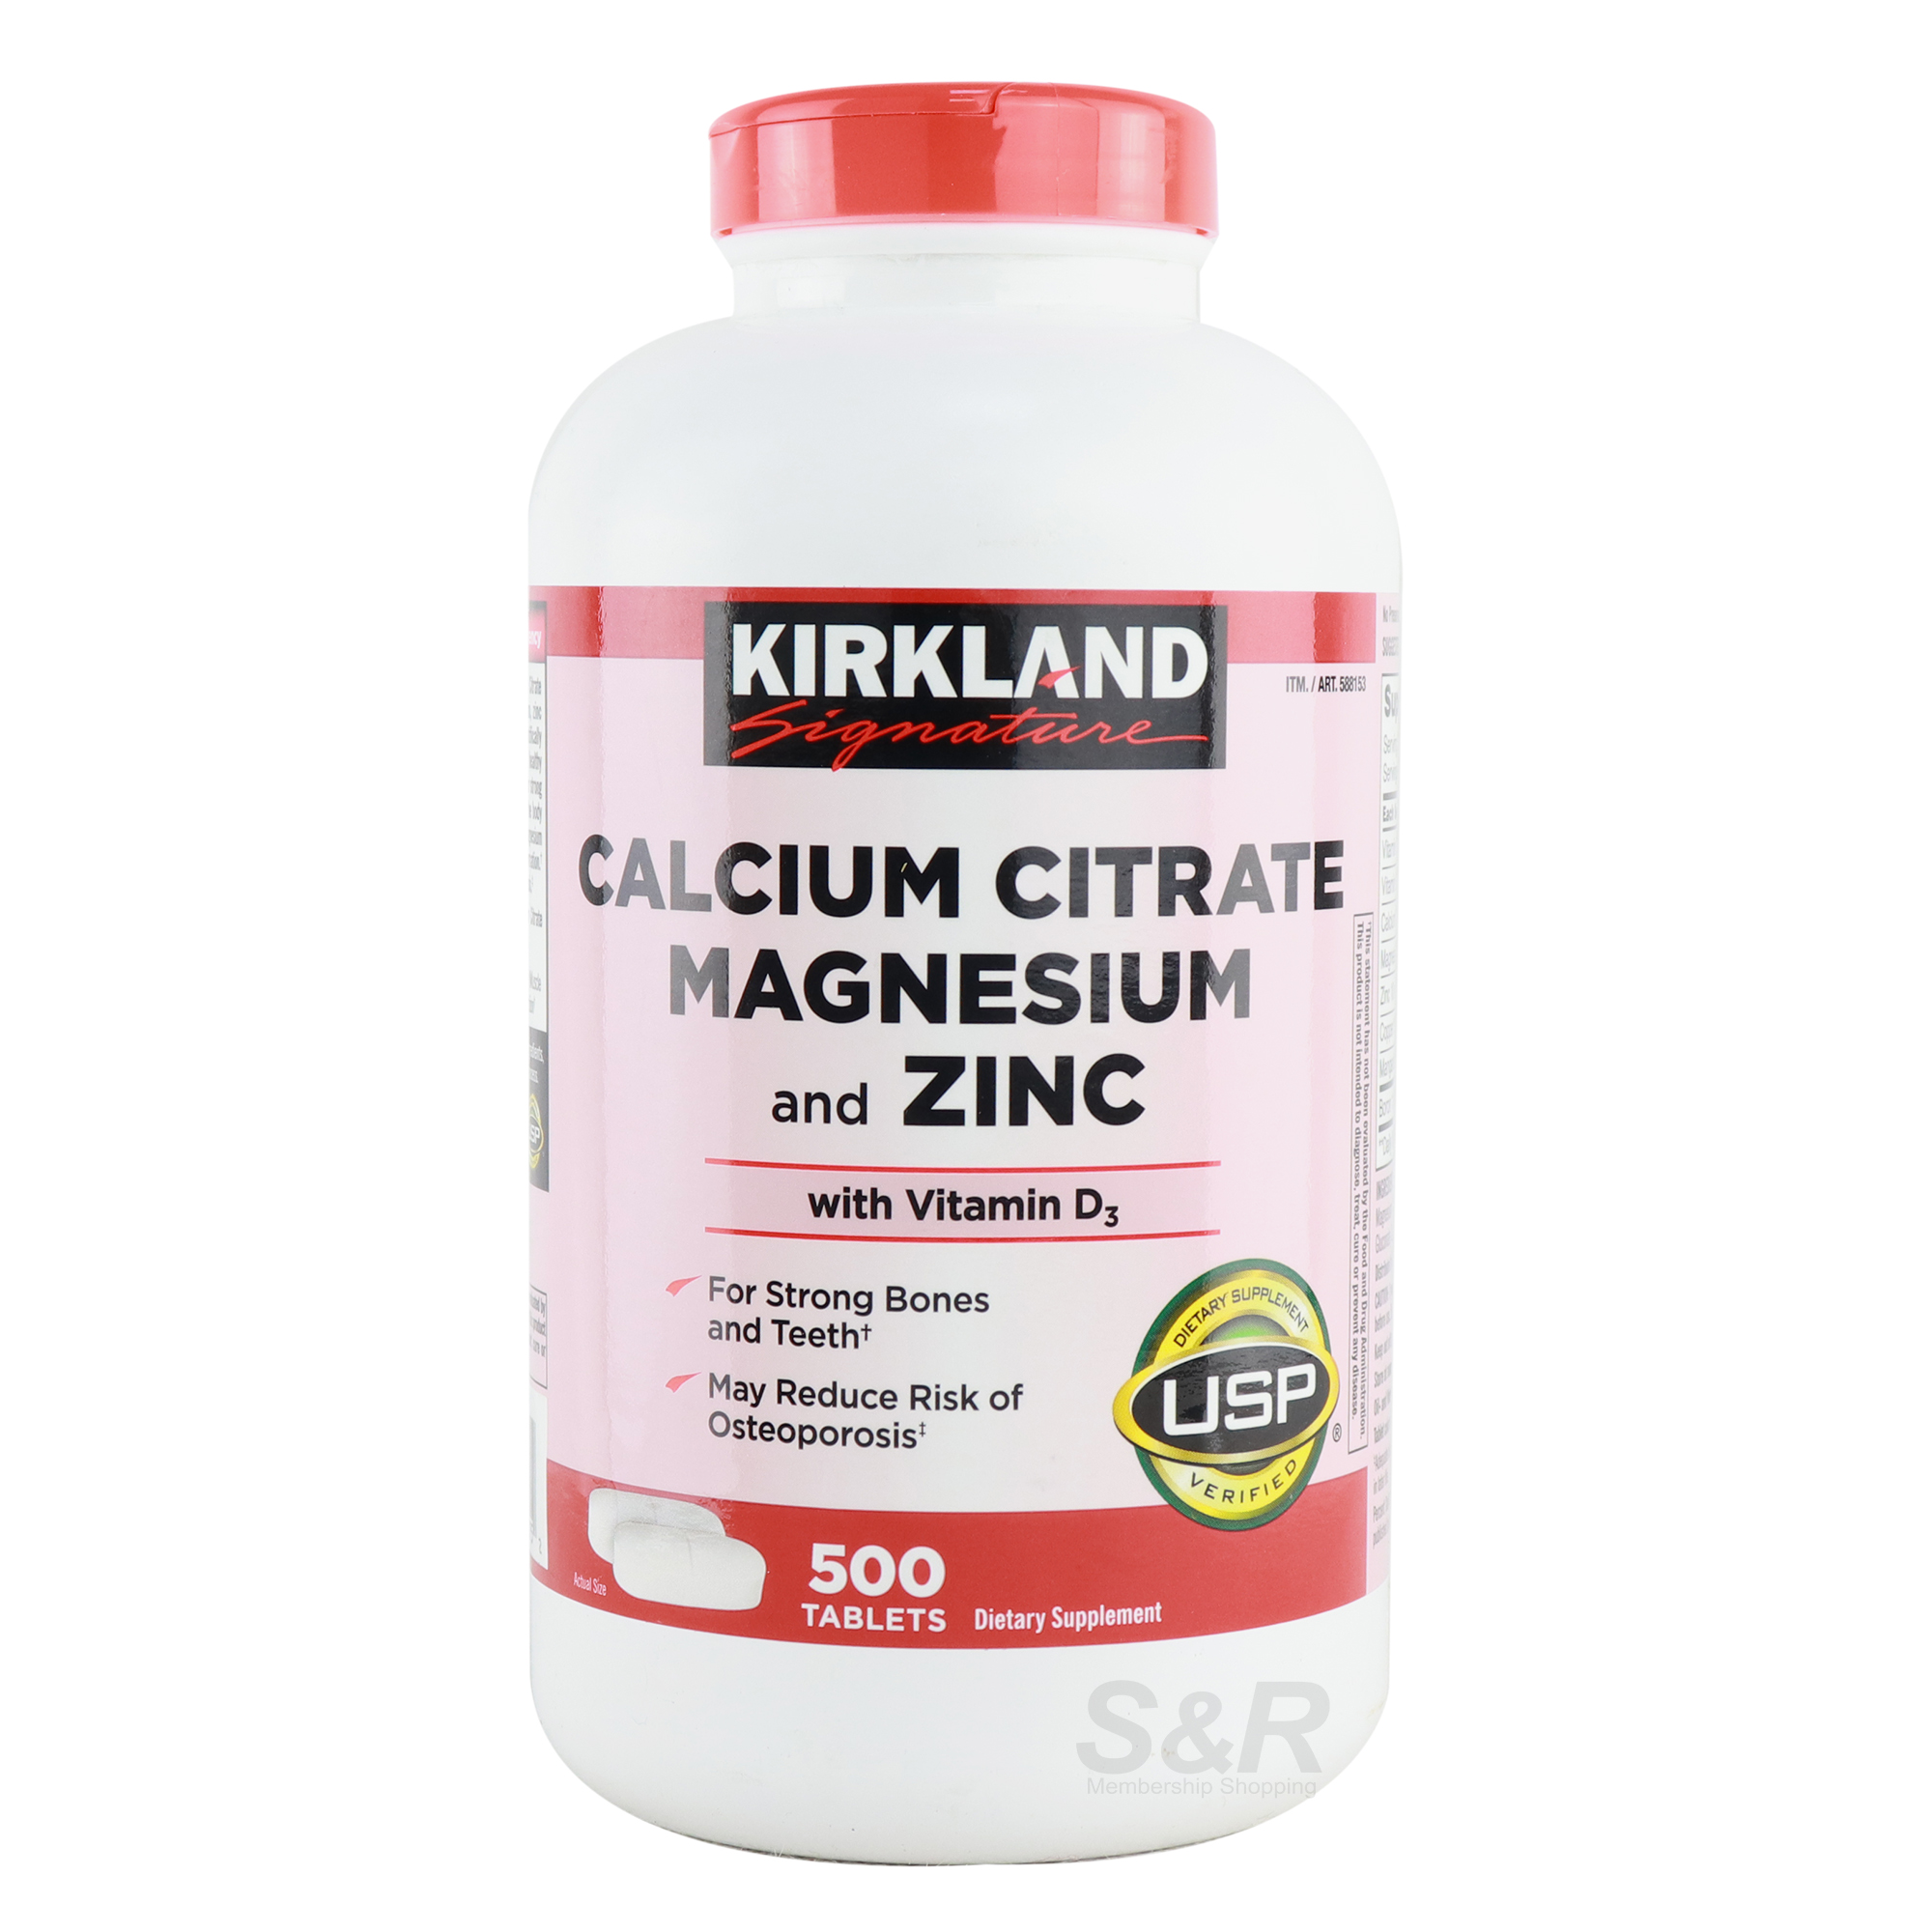 Kirkland Signature Calcium Citrate Magnesium and Zinc Dietary Supplements 500 tablets